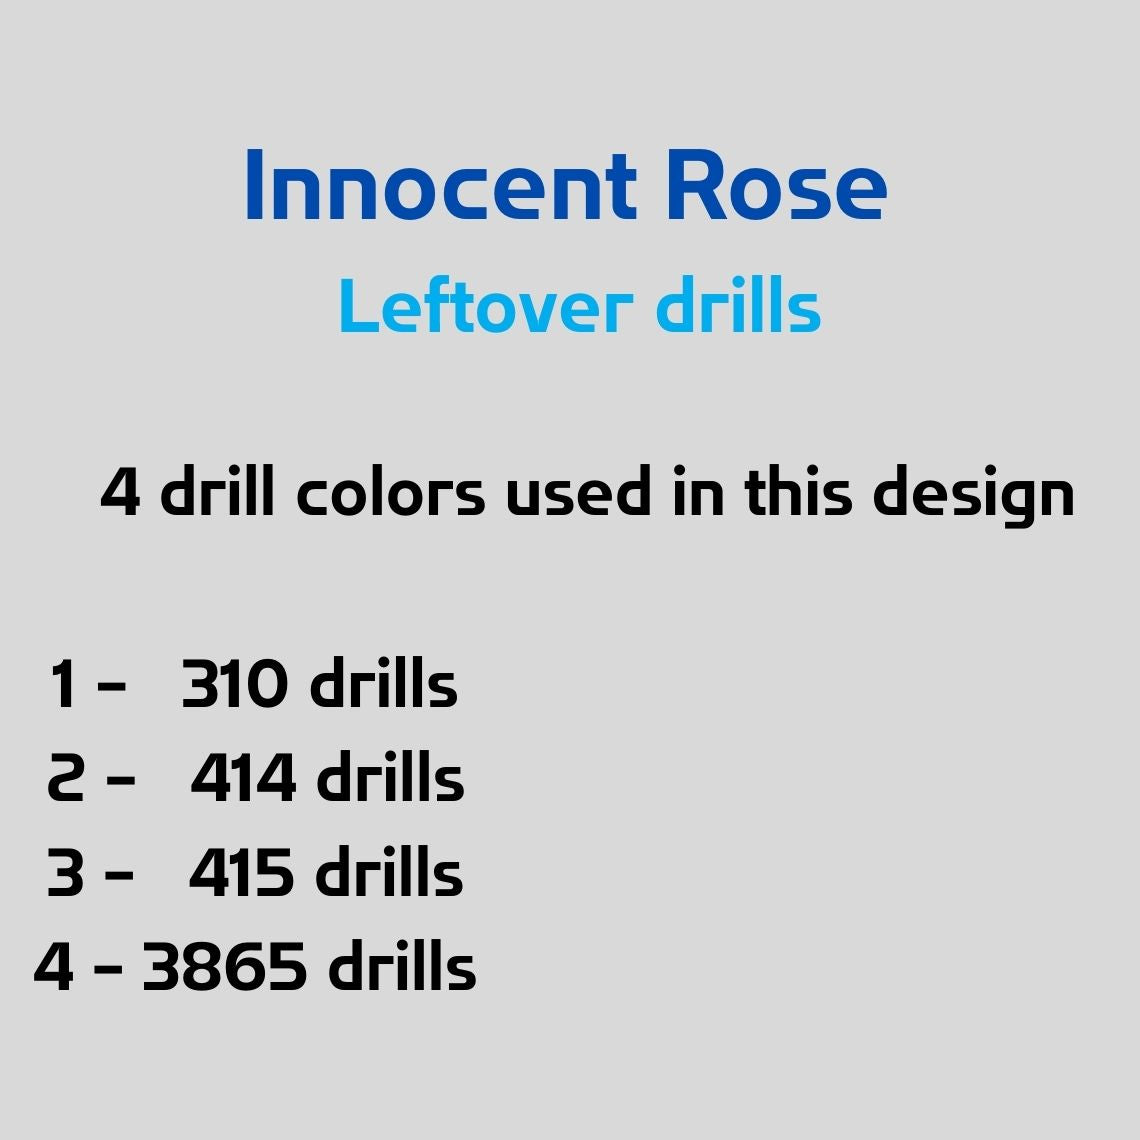 Innocent Rose - Leftover drills count